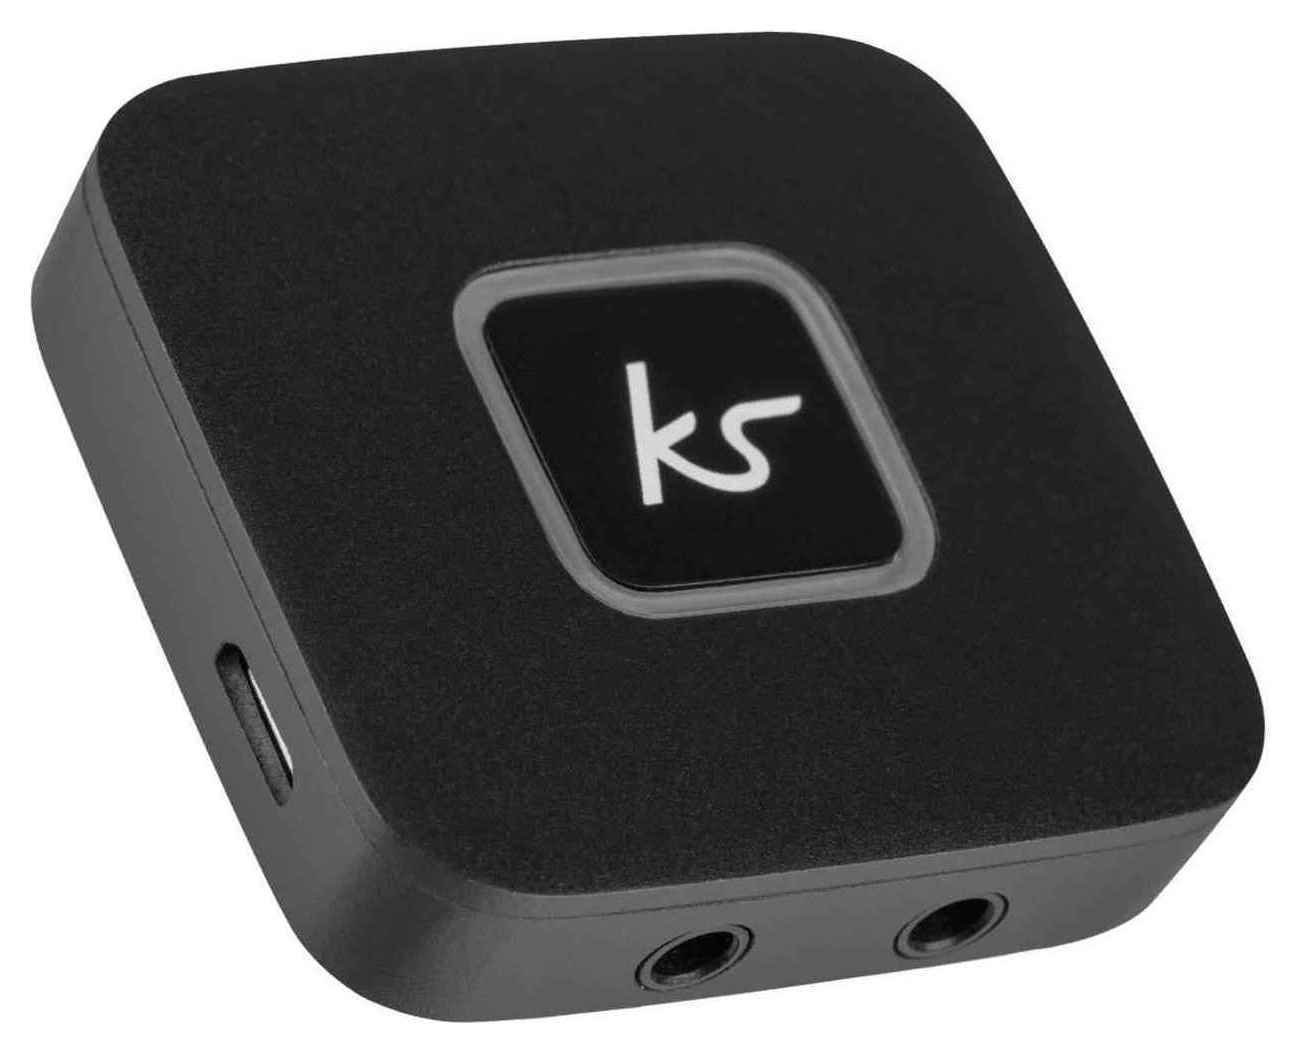 KitSound Bluetooh Headphone Splitter Review